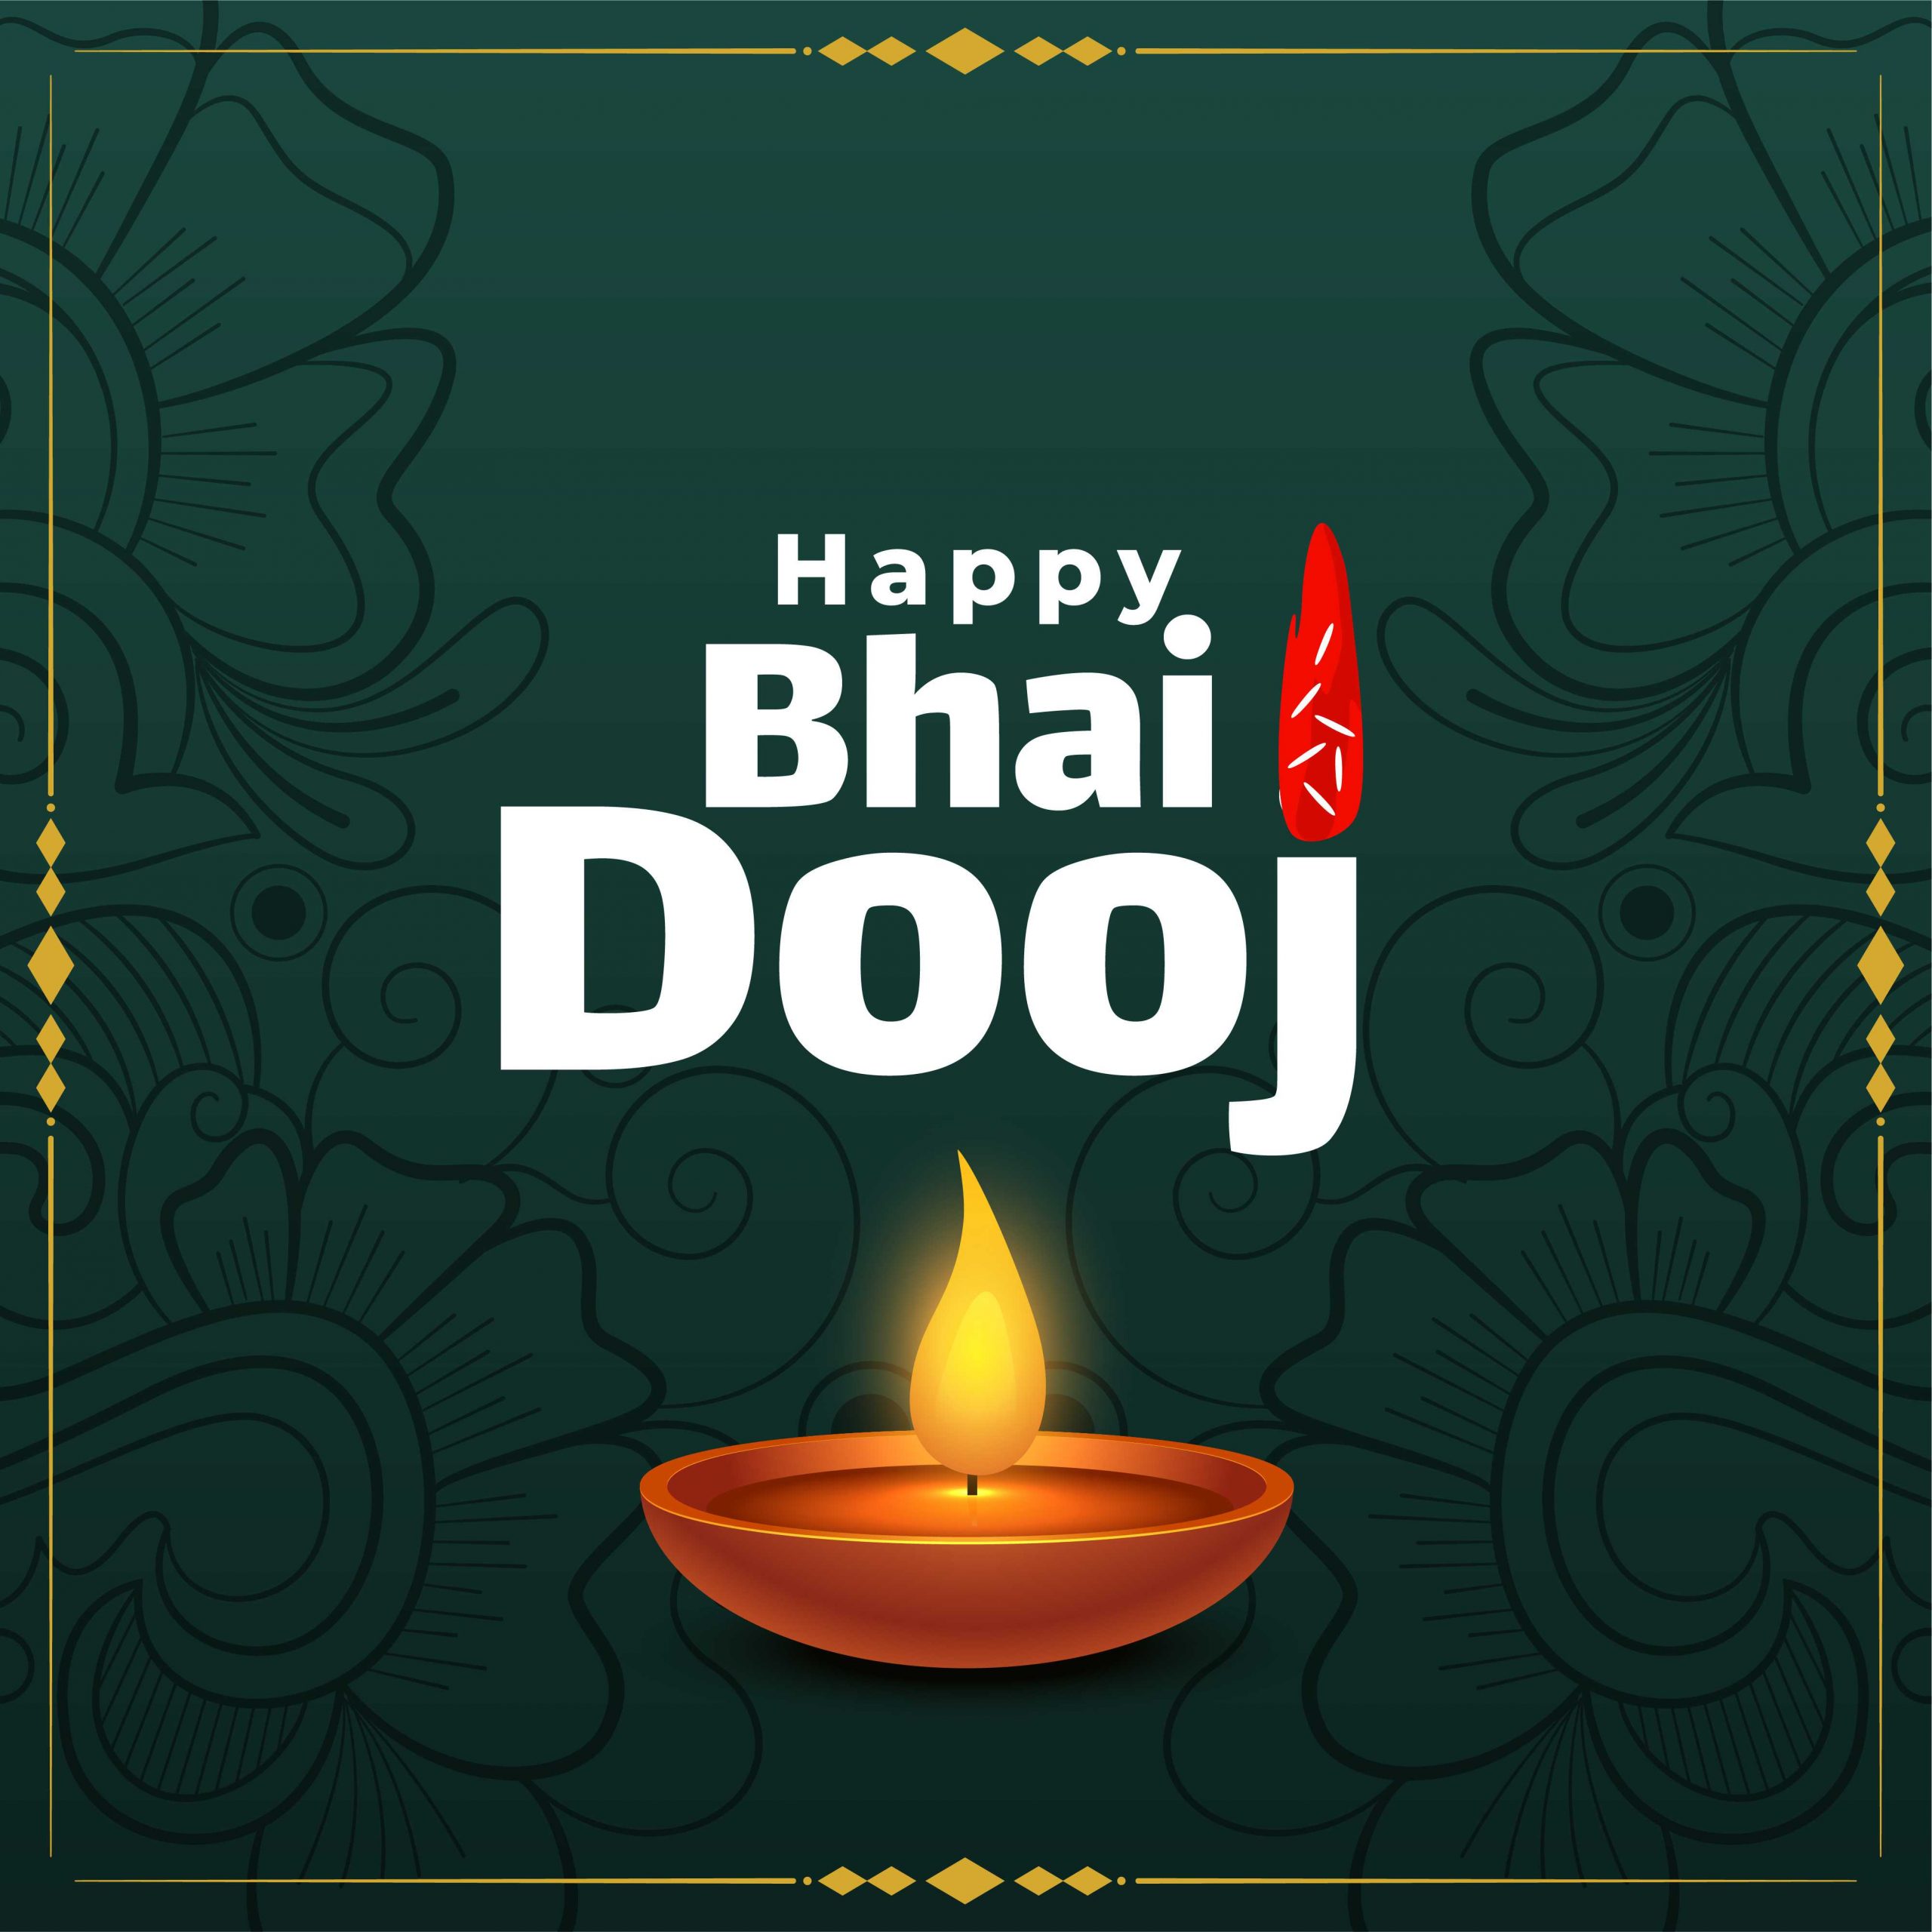 Happy Bhai Dooj image download